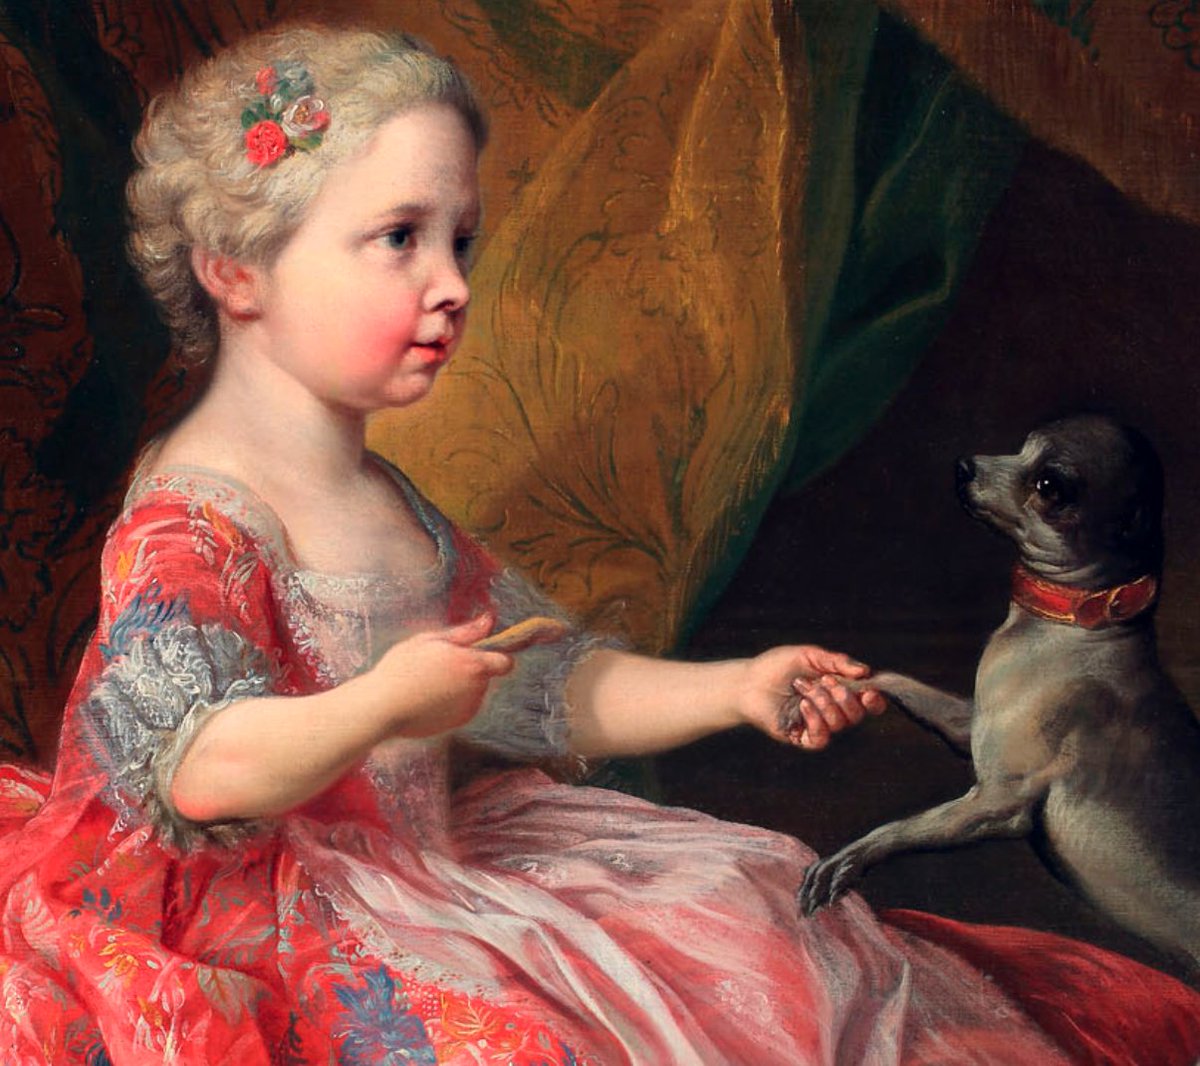 Born #OnThisDay in 1730: #MariaFelicitaofSavoy (1730-1801), daughter of King #CharlesEmmanuelIII of Sardinia 

Portrait as a girl by #LouisMichelvanLoo (1707-71), 1733

#Savoy #ChildrenInArt #DogsInArt